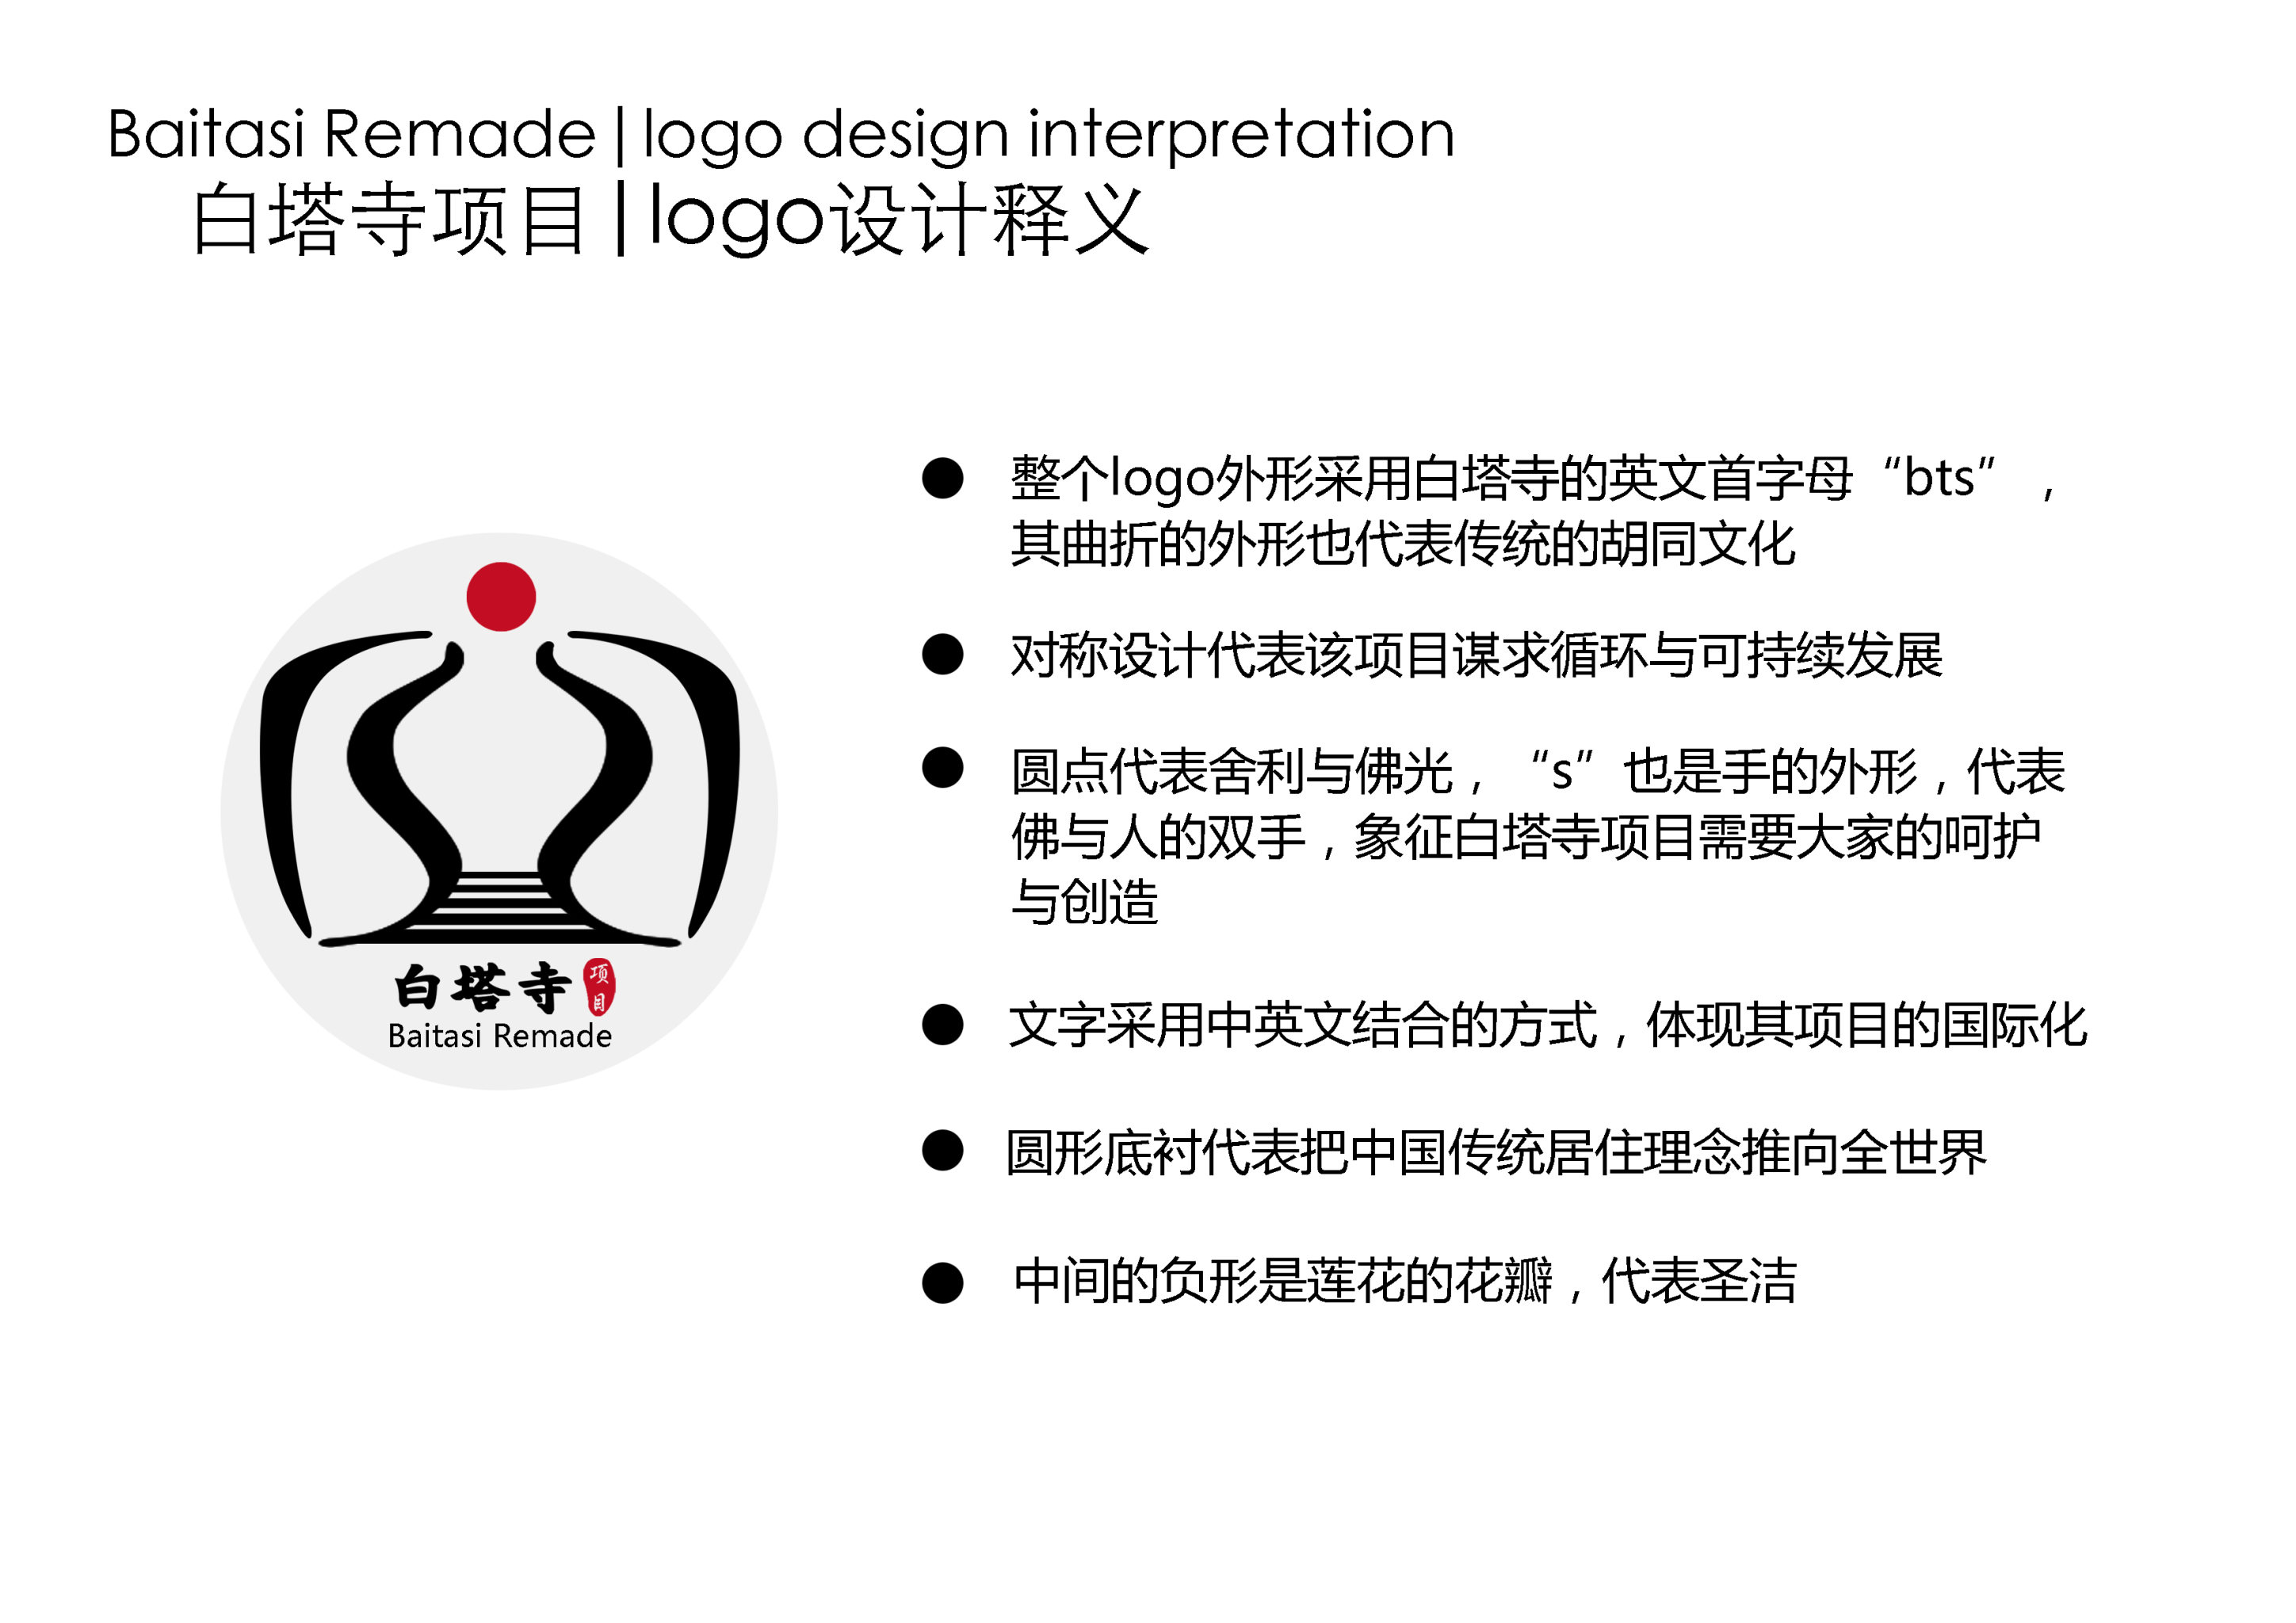 logo设计说明模板100字图片